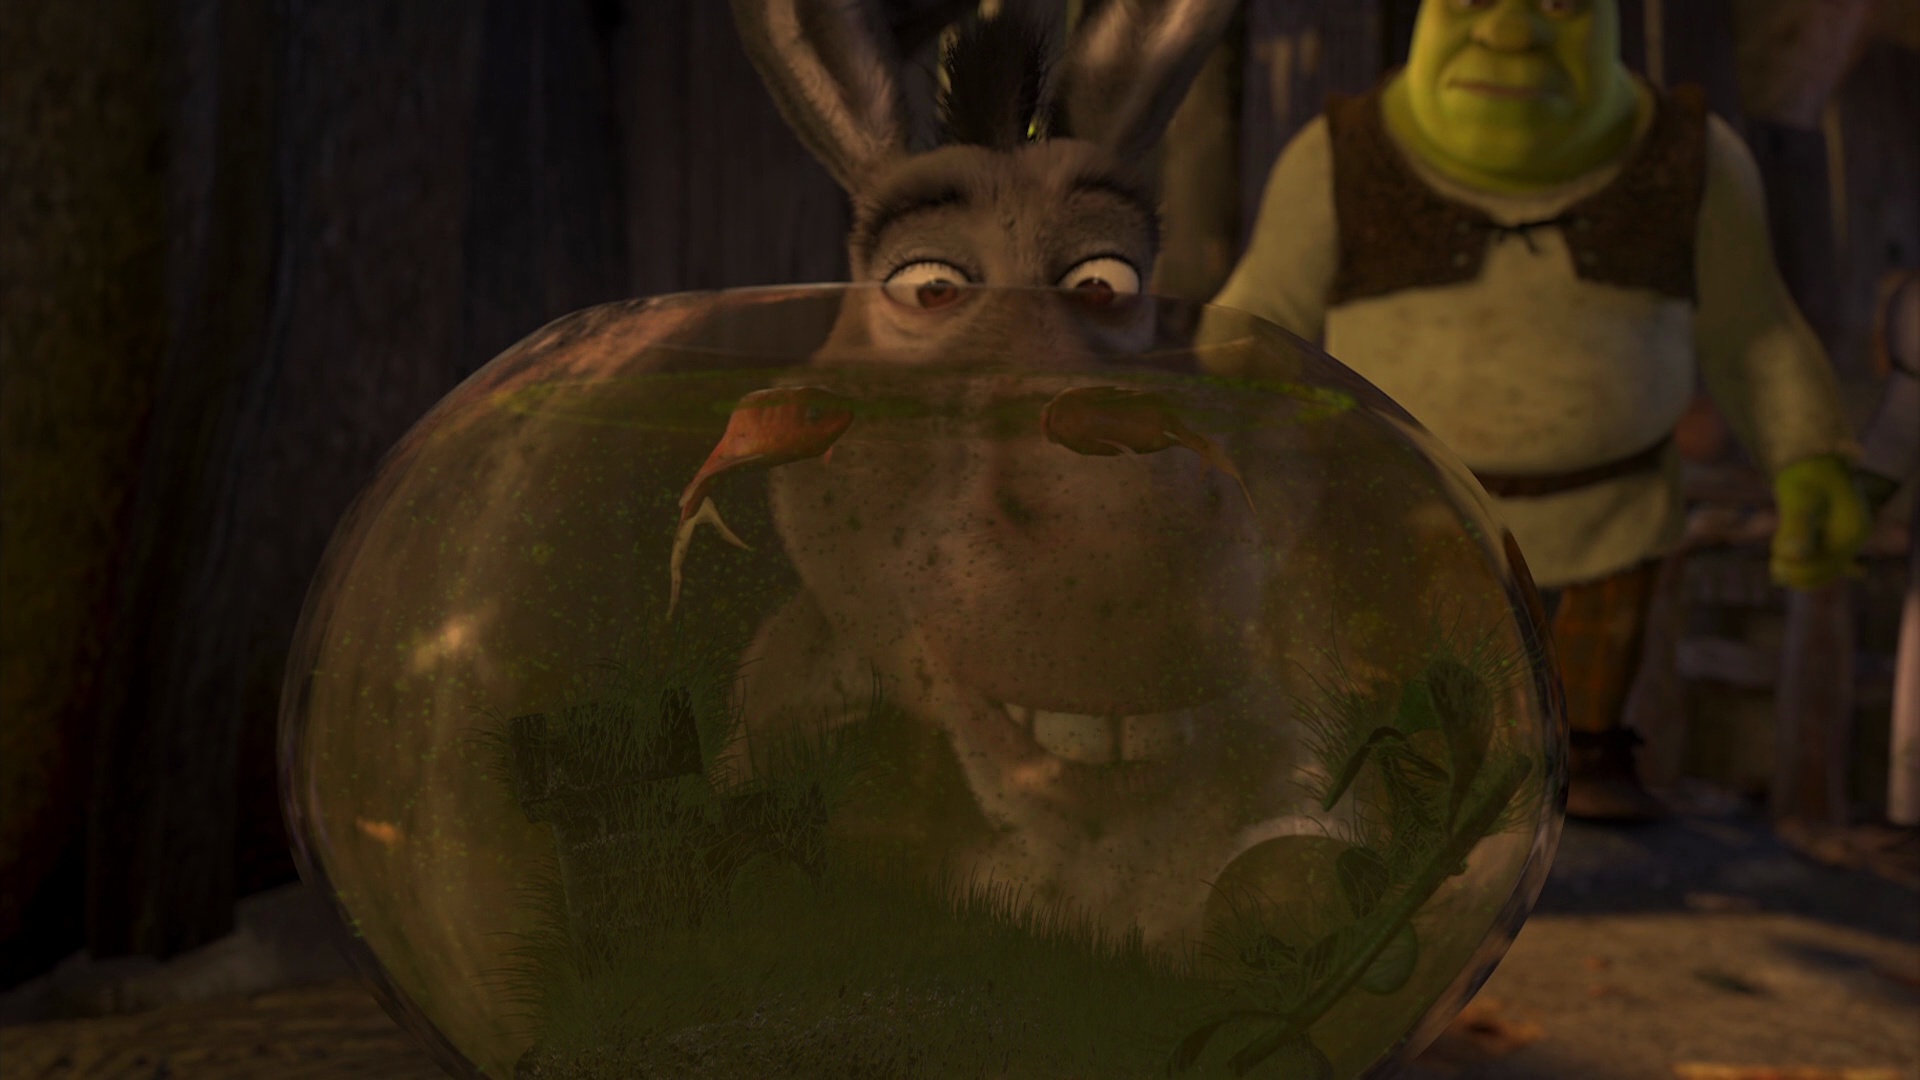 Burro.  Shrek character, Shrek, Shrek donkey